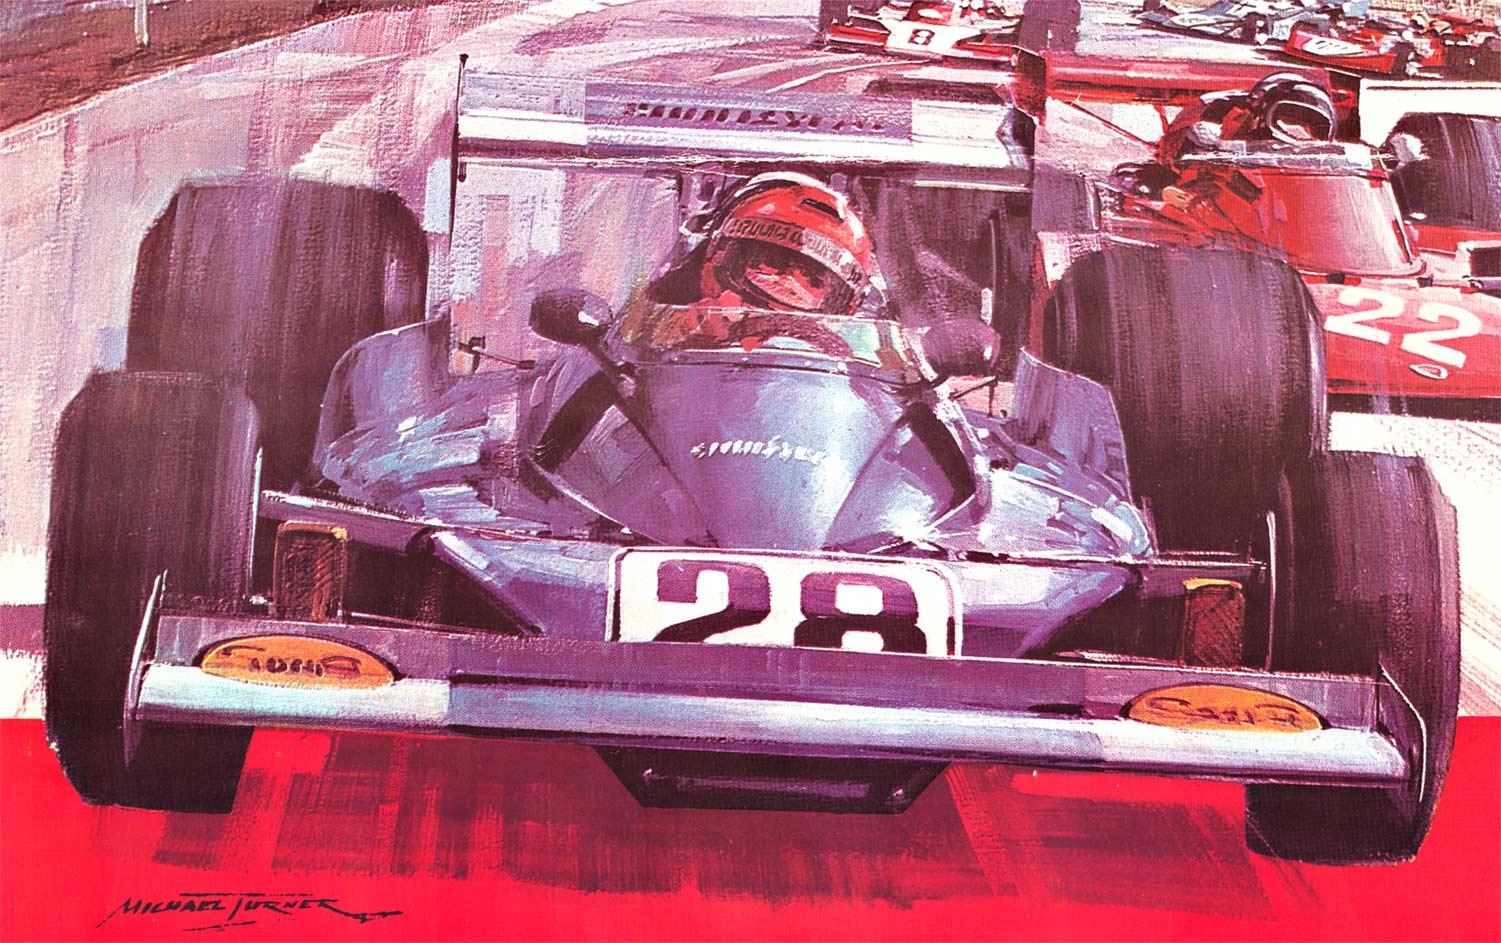 Original XXII Gran Premio de Espana vintage poster; artist Michael Turner, size:  26.5